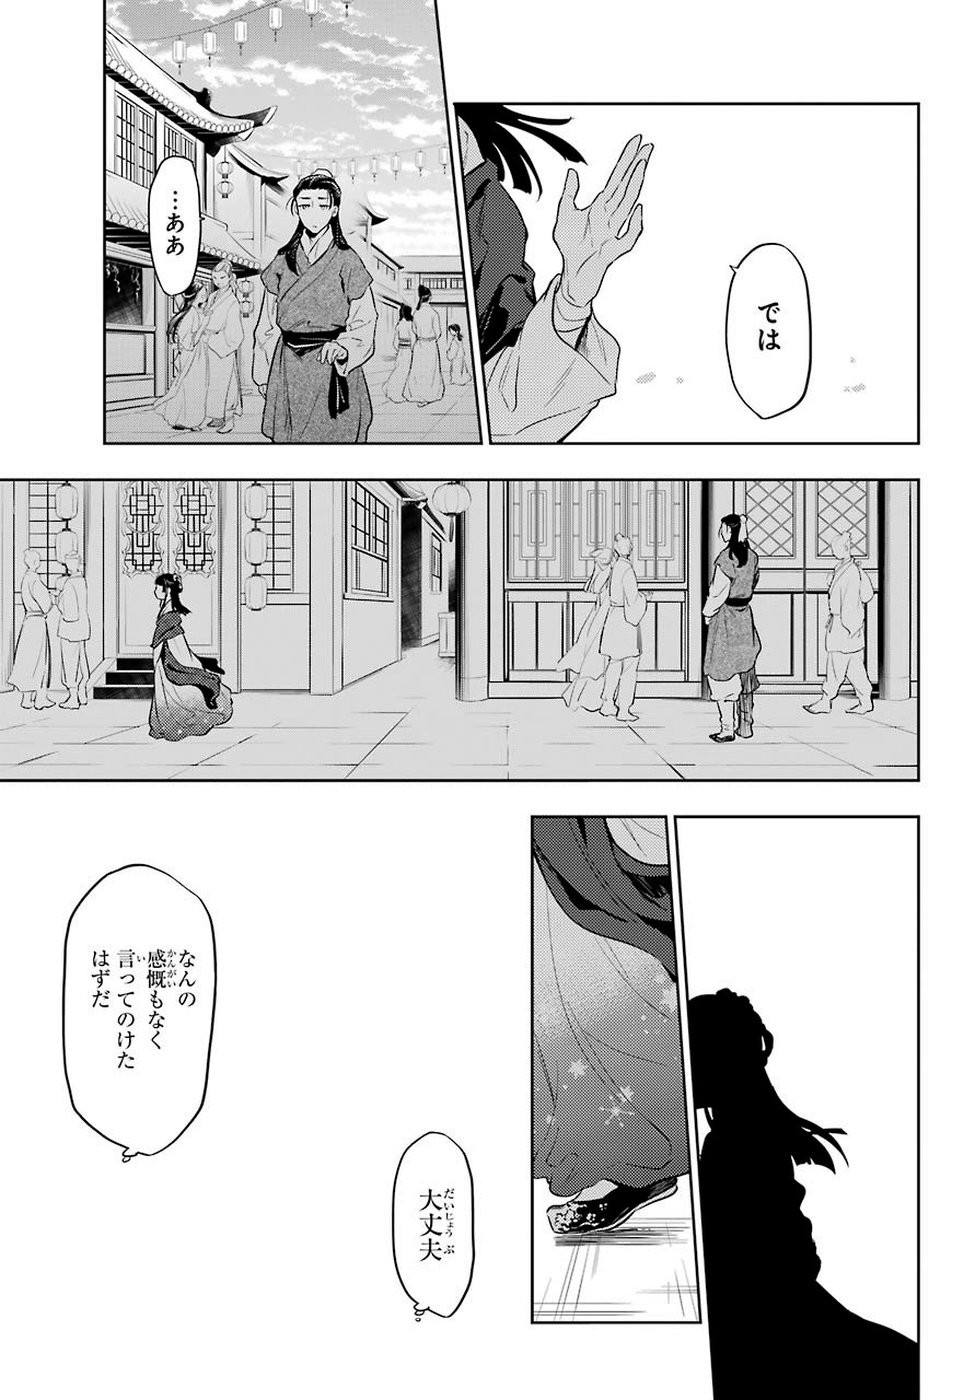 Kusuriya no Hitorigoto - Chapter 28-1 - Page 17